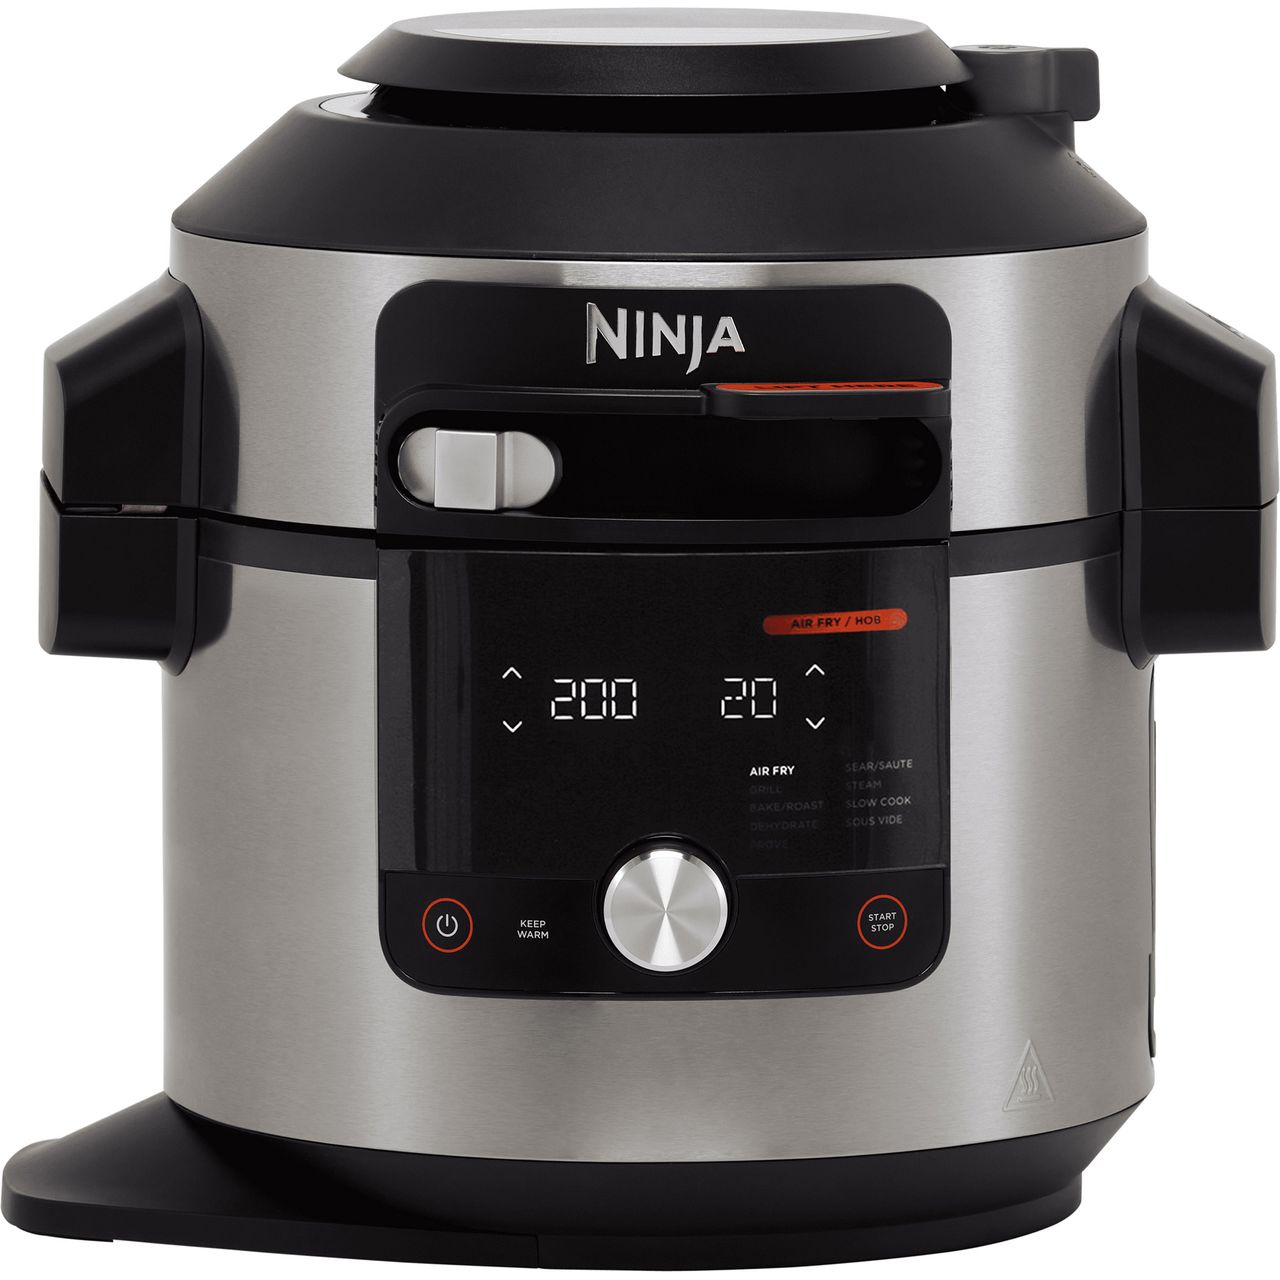 OL750UK, Ninja Multi Cooker, 15 Programmes